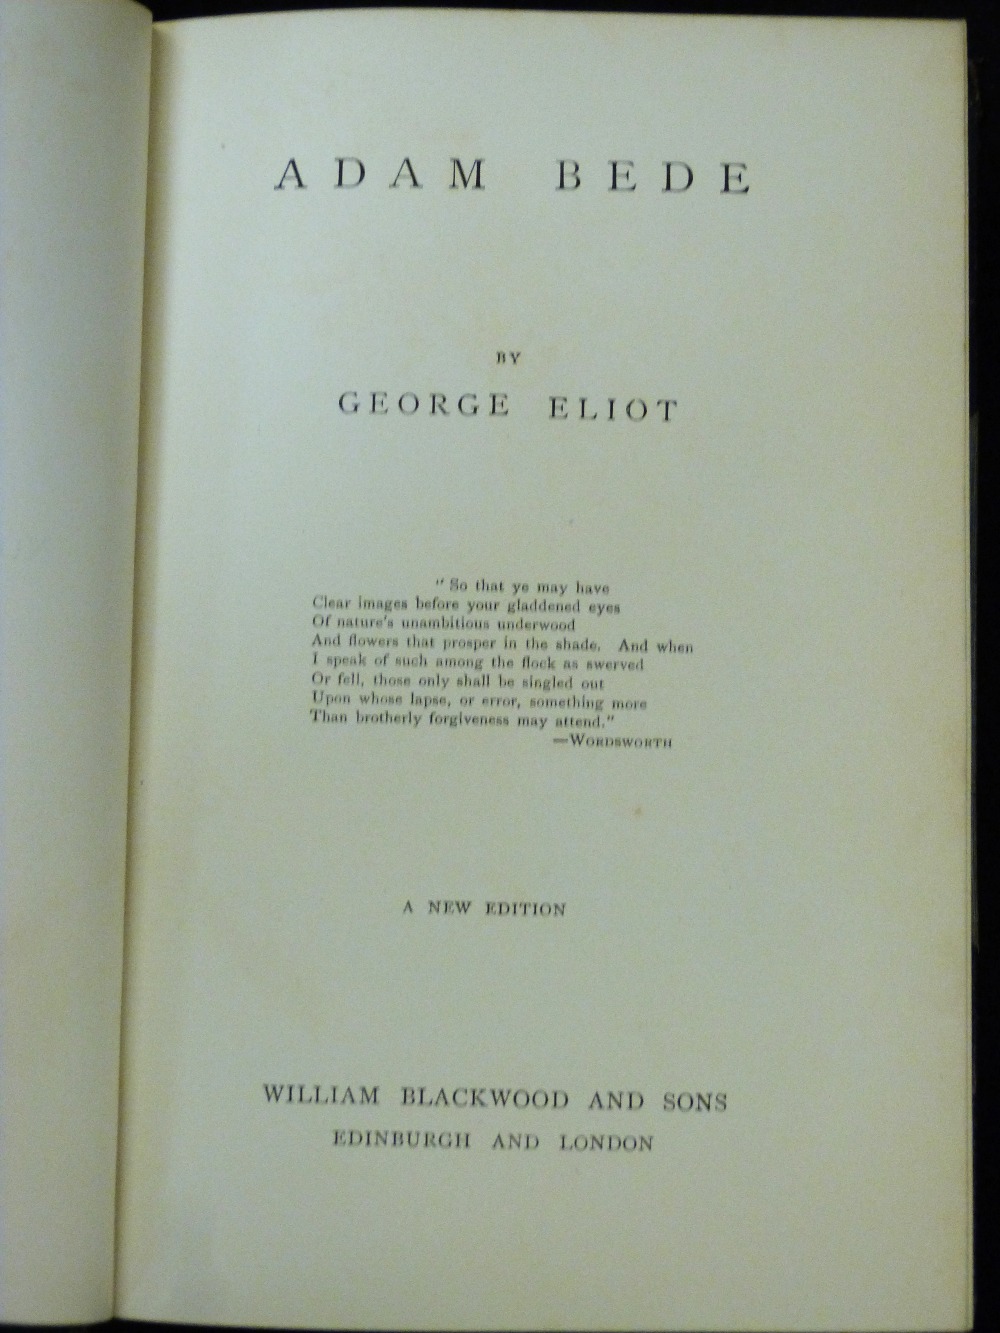 GEORGE ELIOT: NOVELS OF, Edinburgh and London, William Blackwood & Sons, circa 1890, 7 vols, - Image 3 of 3